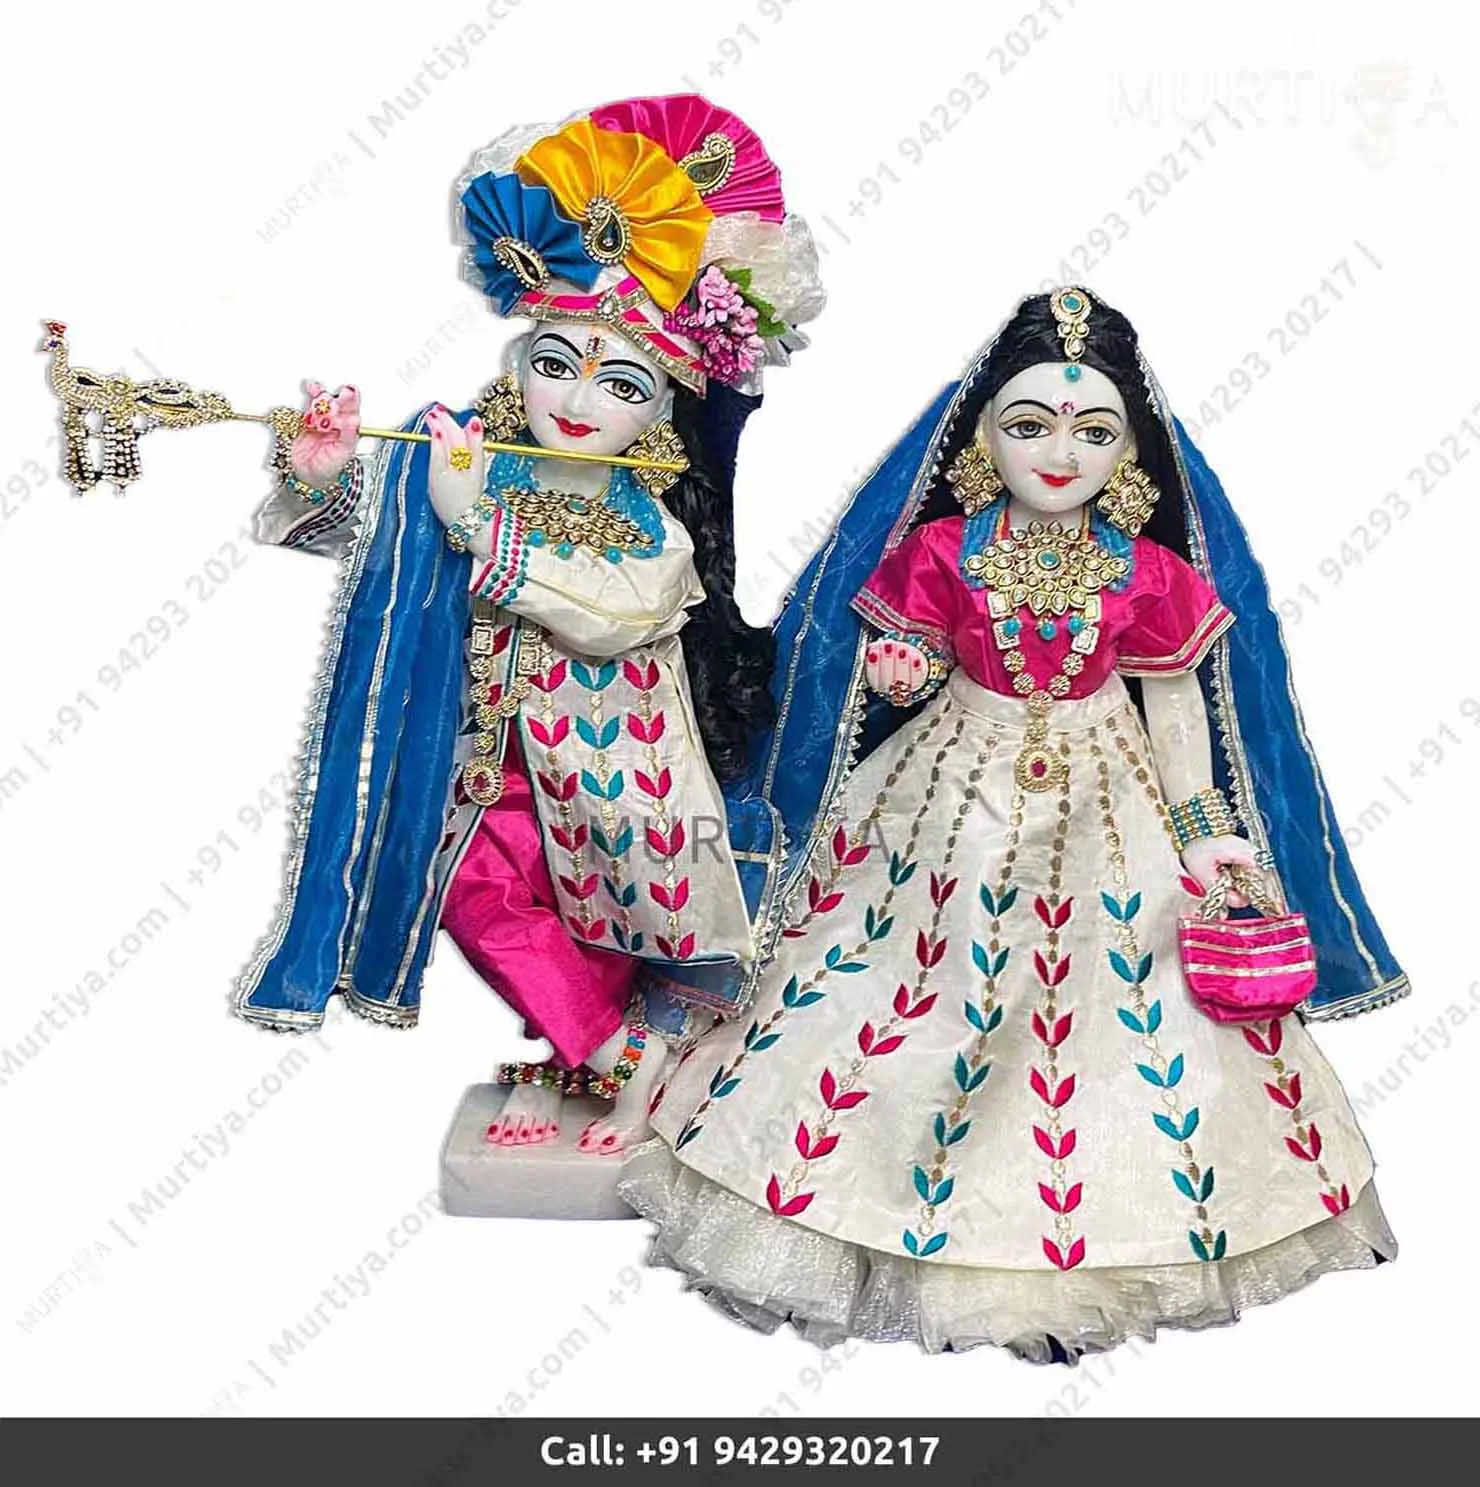 Premium Collection Of Laddu Gopal, Radha Krishna Dresses & Accessories only  at www.amfez.com #amfezz | Instagram